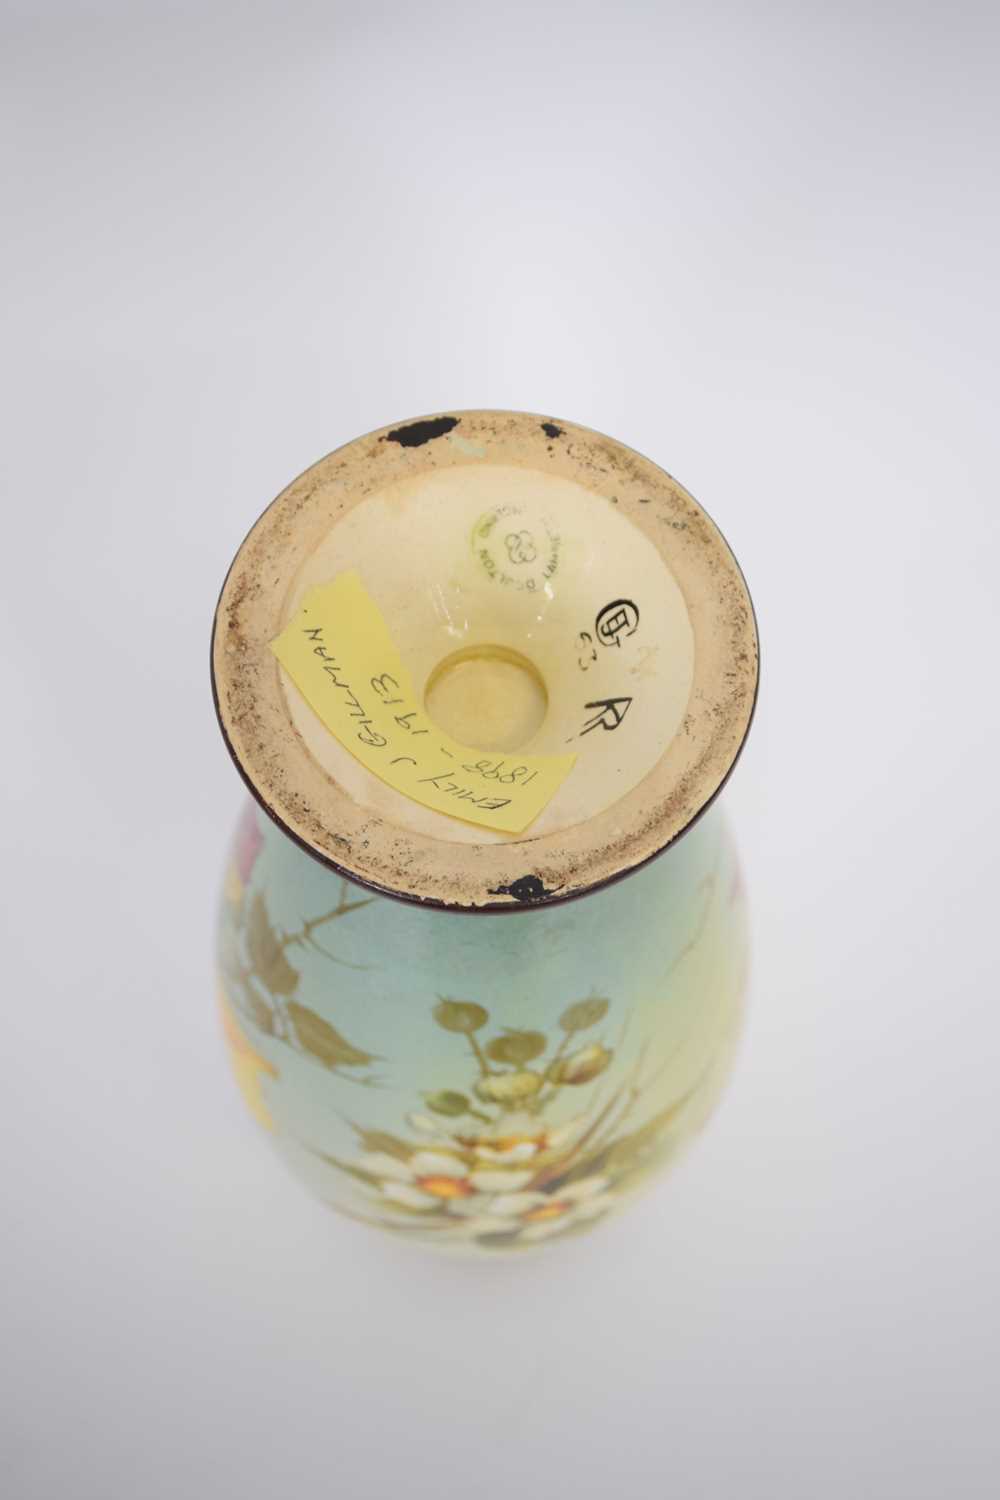 Doulton Lambeth Vase by Emily Gillman - Image 2 of 6